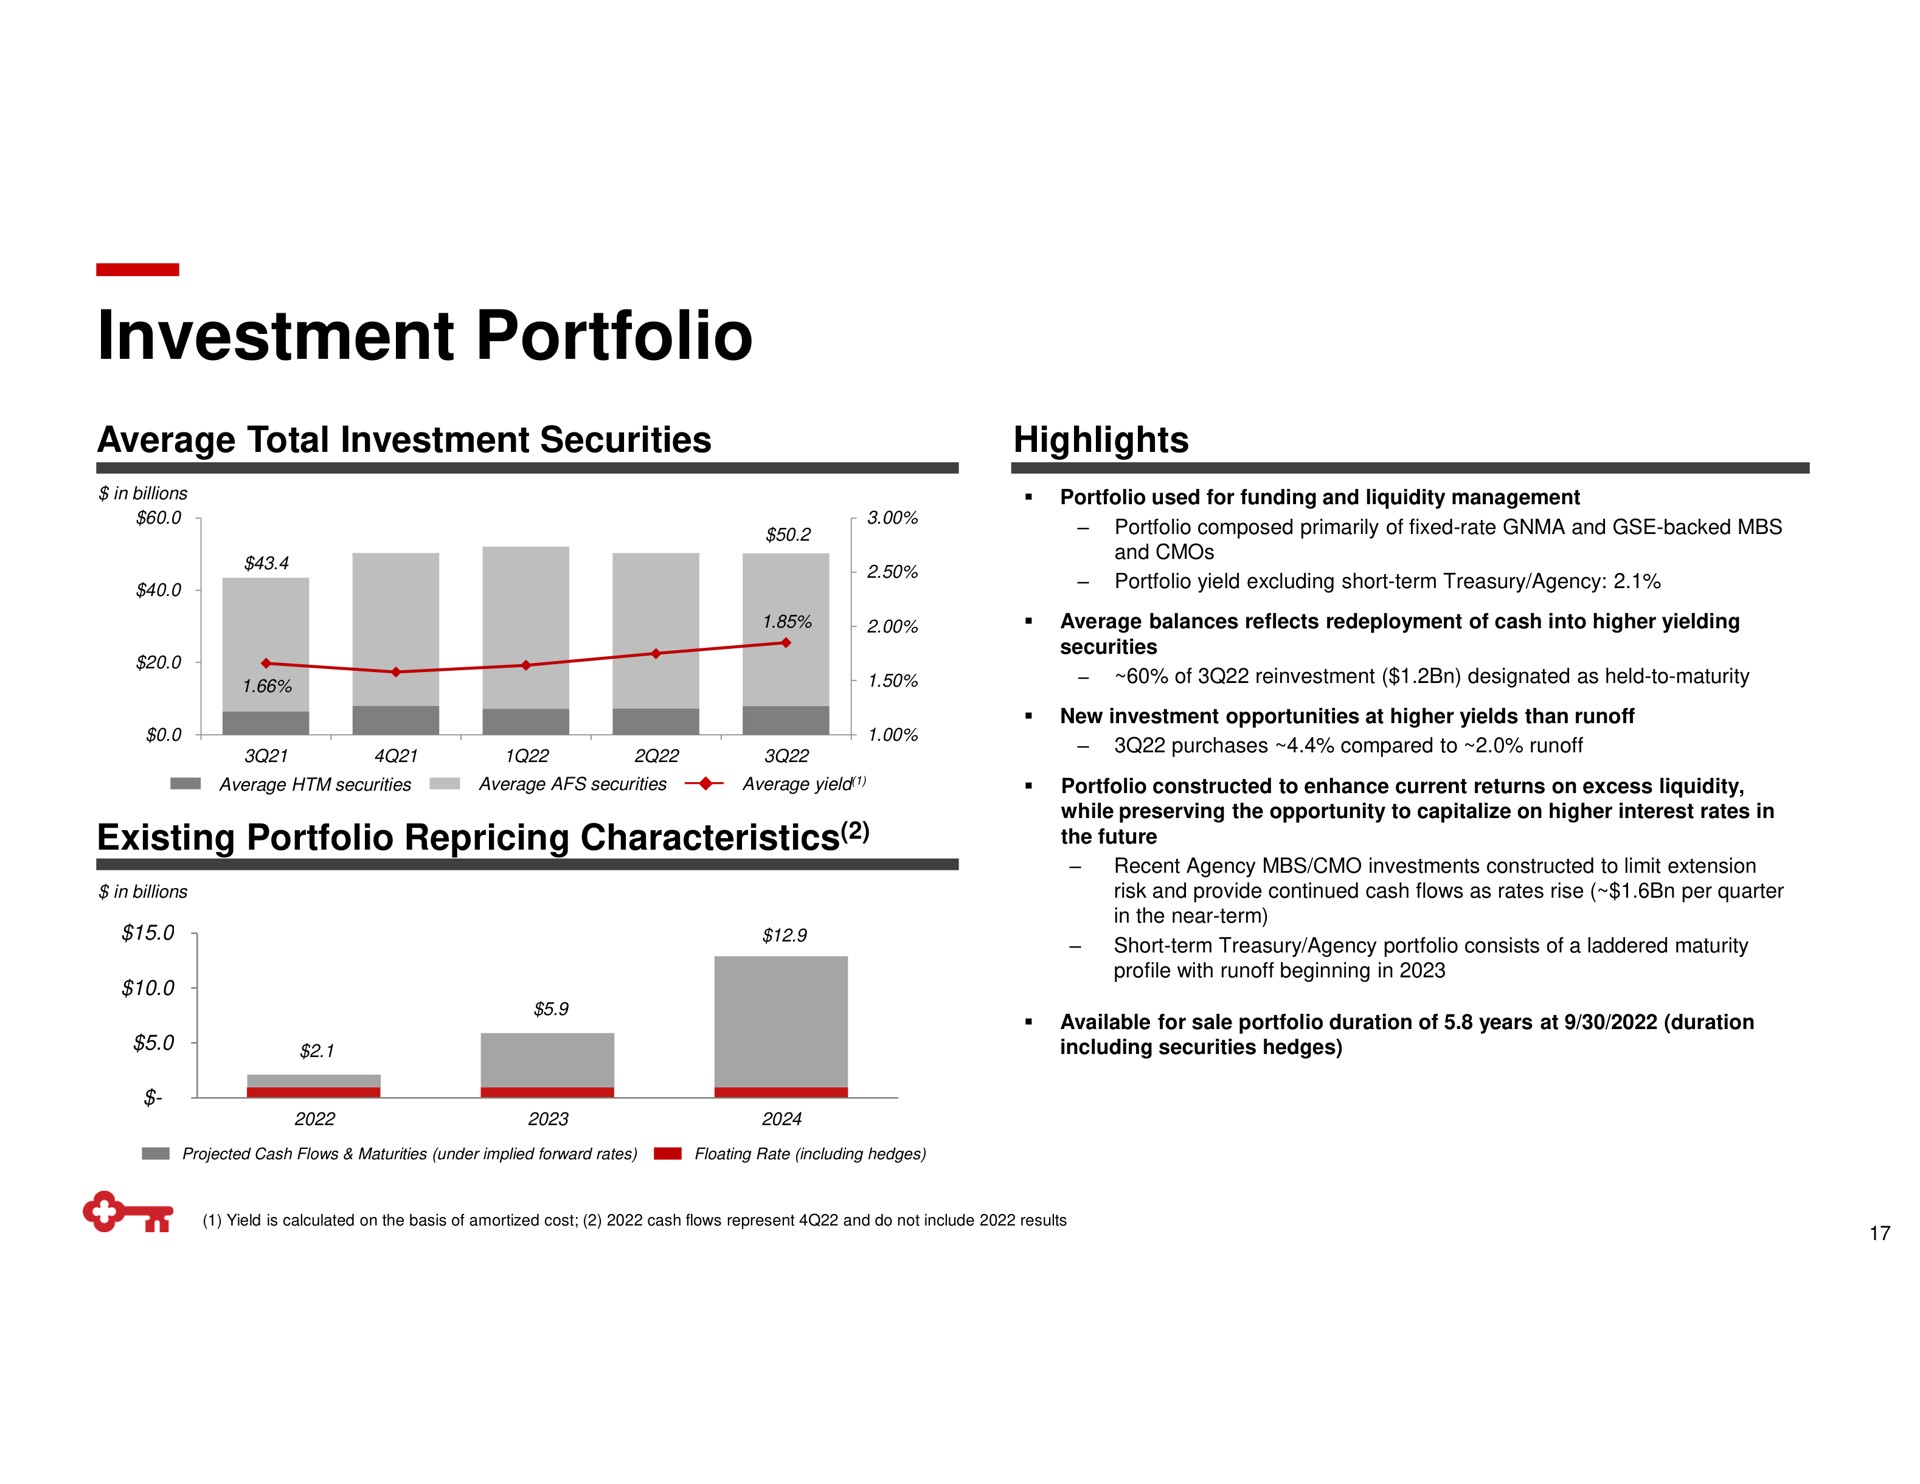 investment portfolio average total investment securities highlights existing portfolio characteristics | KeyCorp